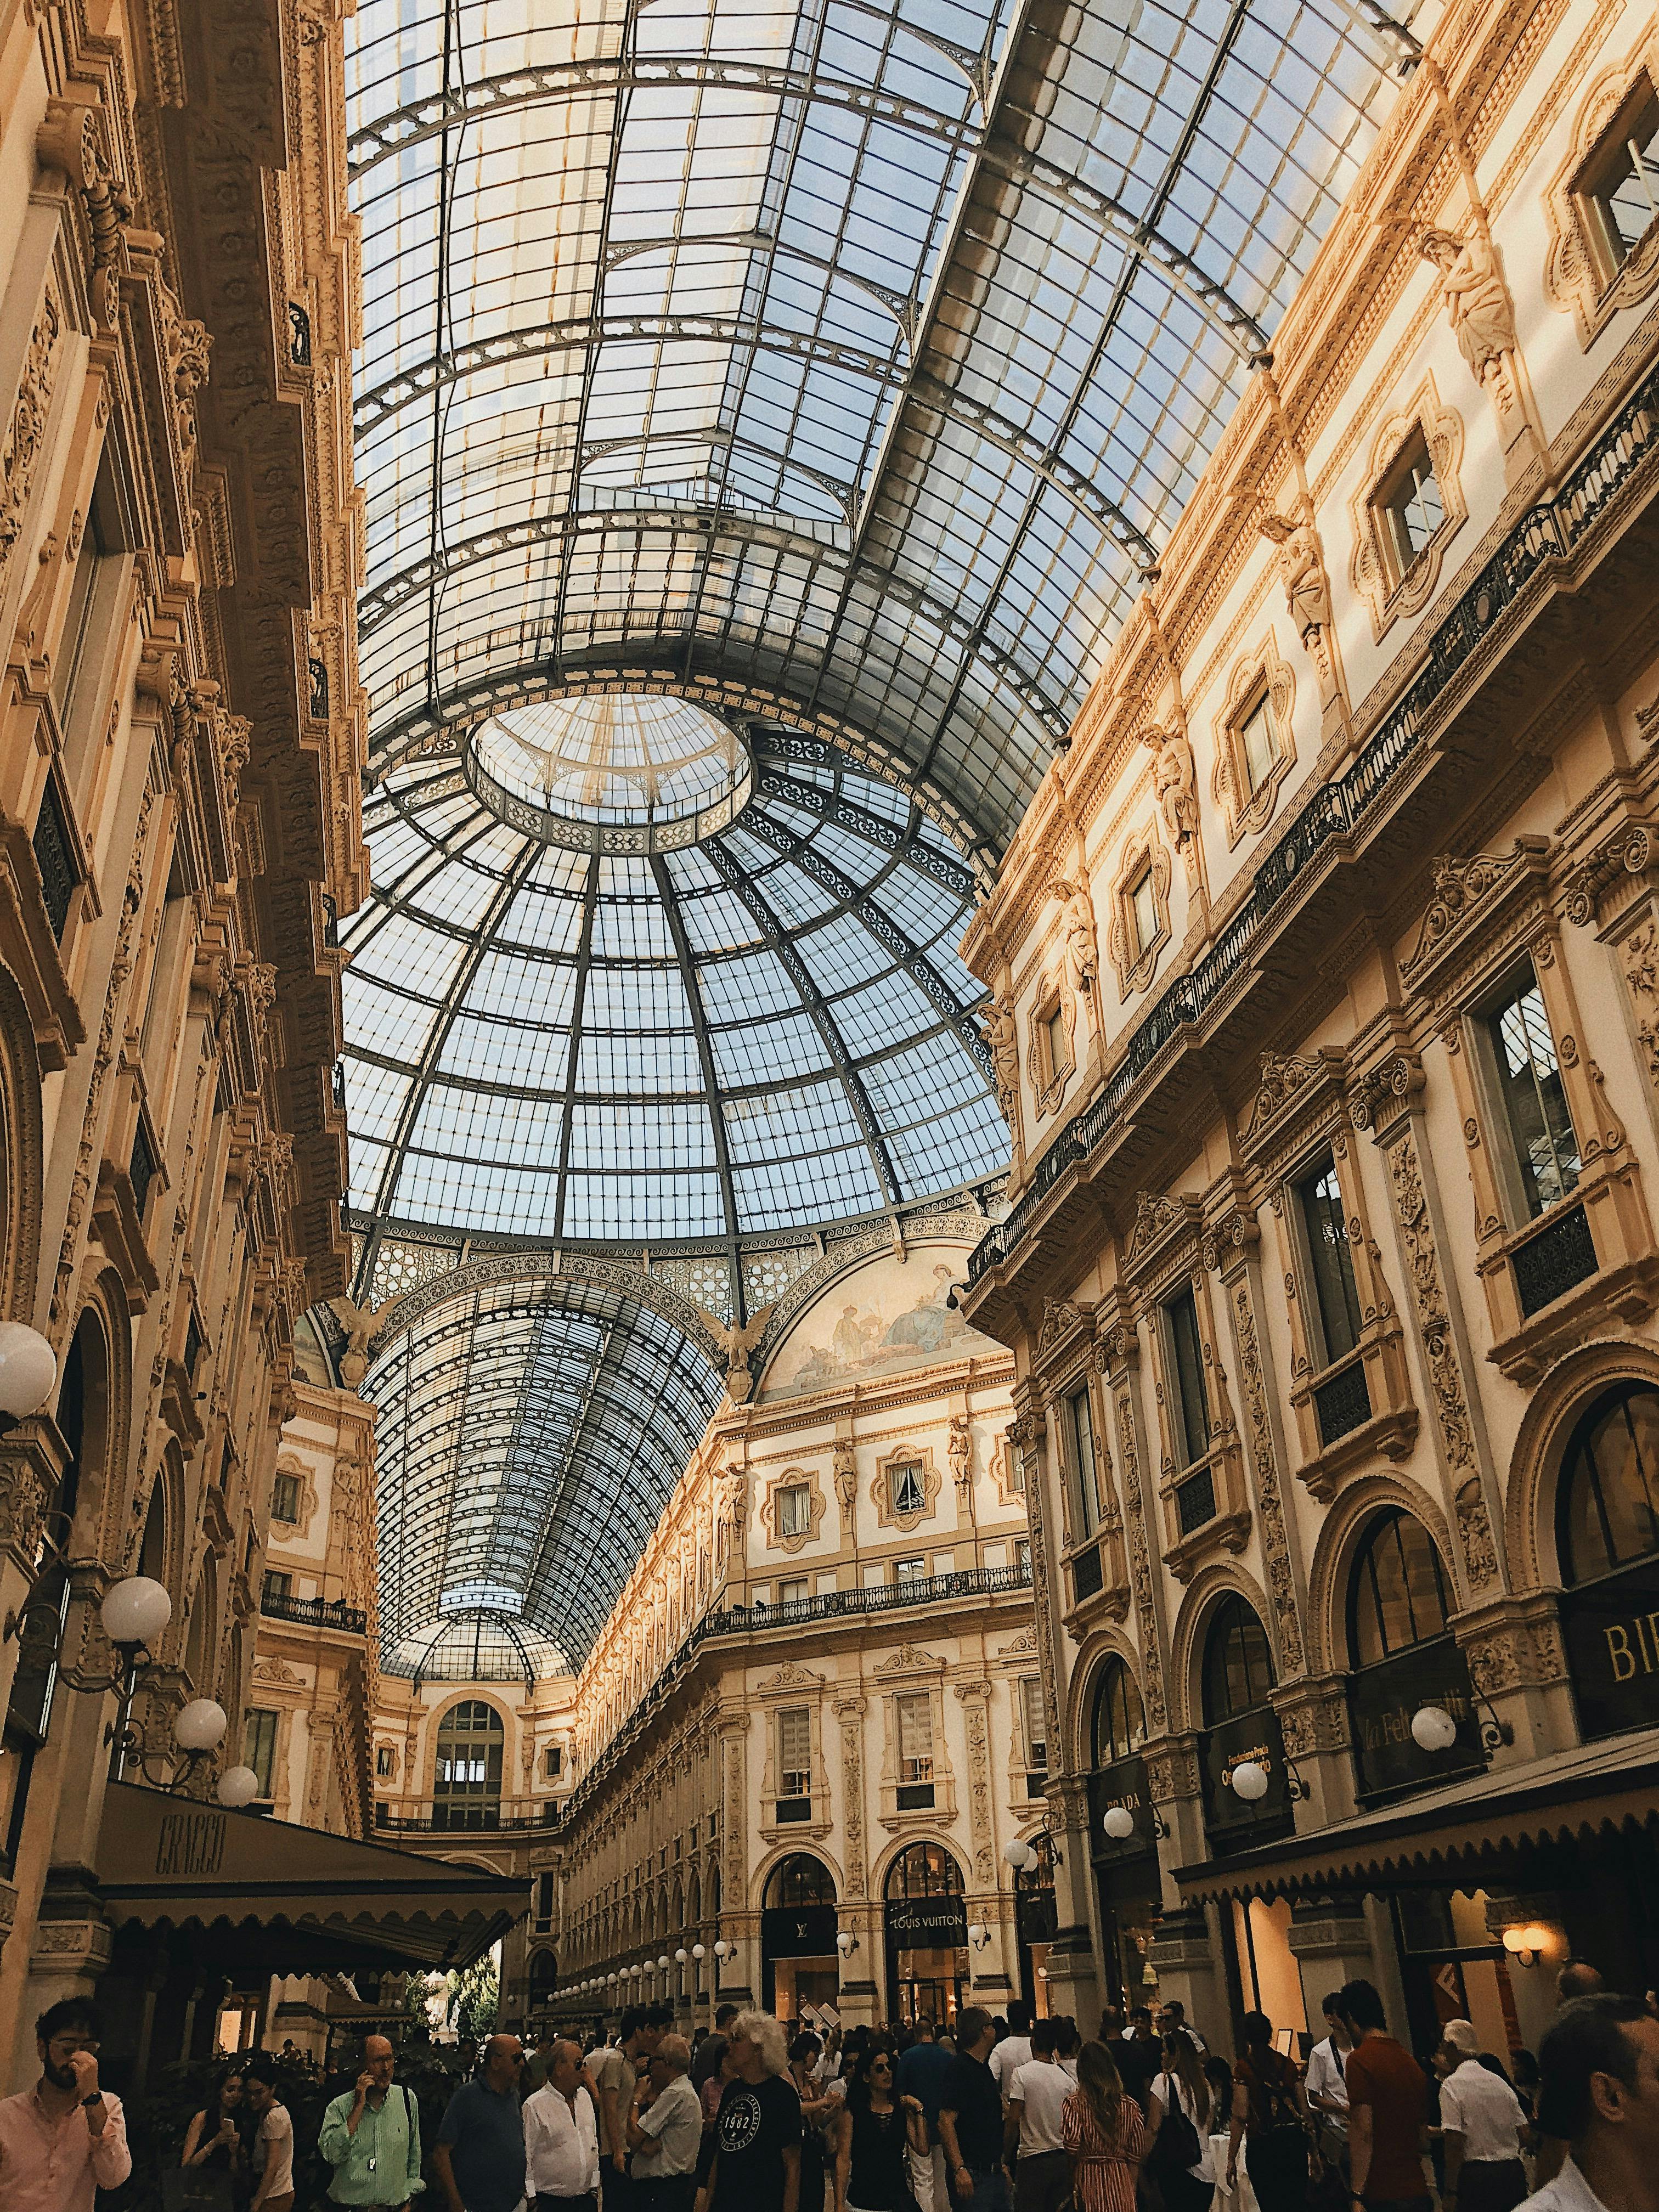 Galleria Vittorio Emanuele Ii Milan Stock Photo - Download Image